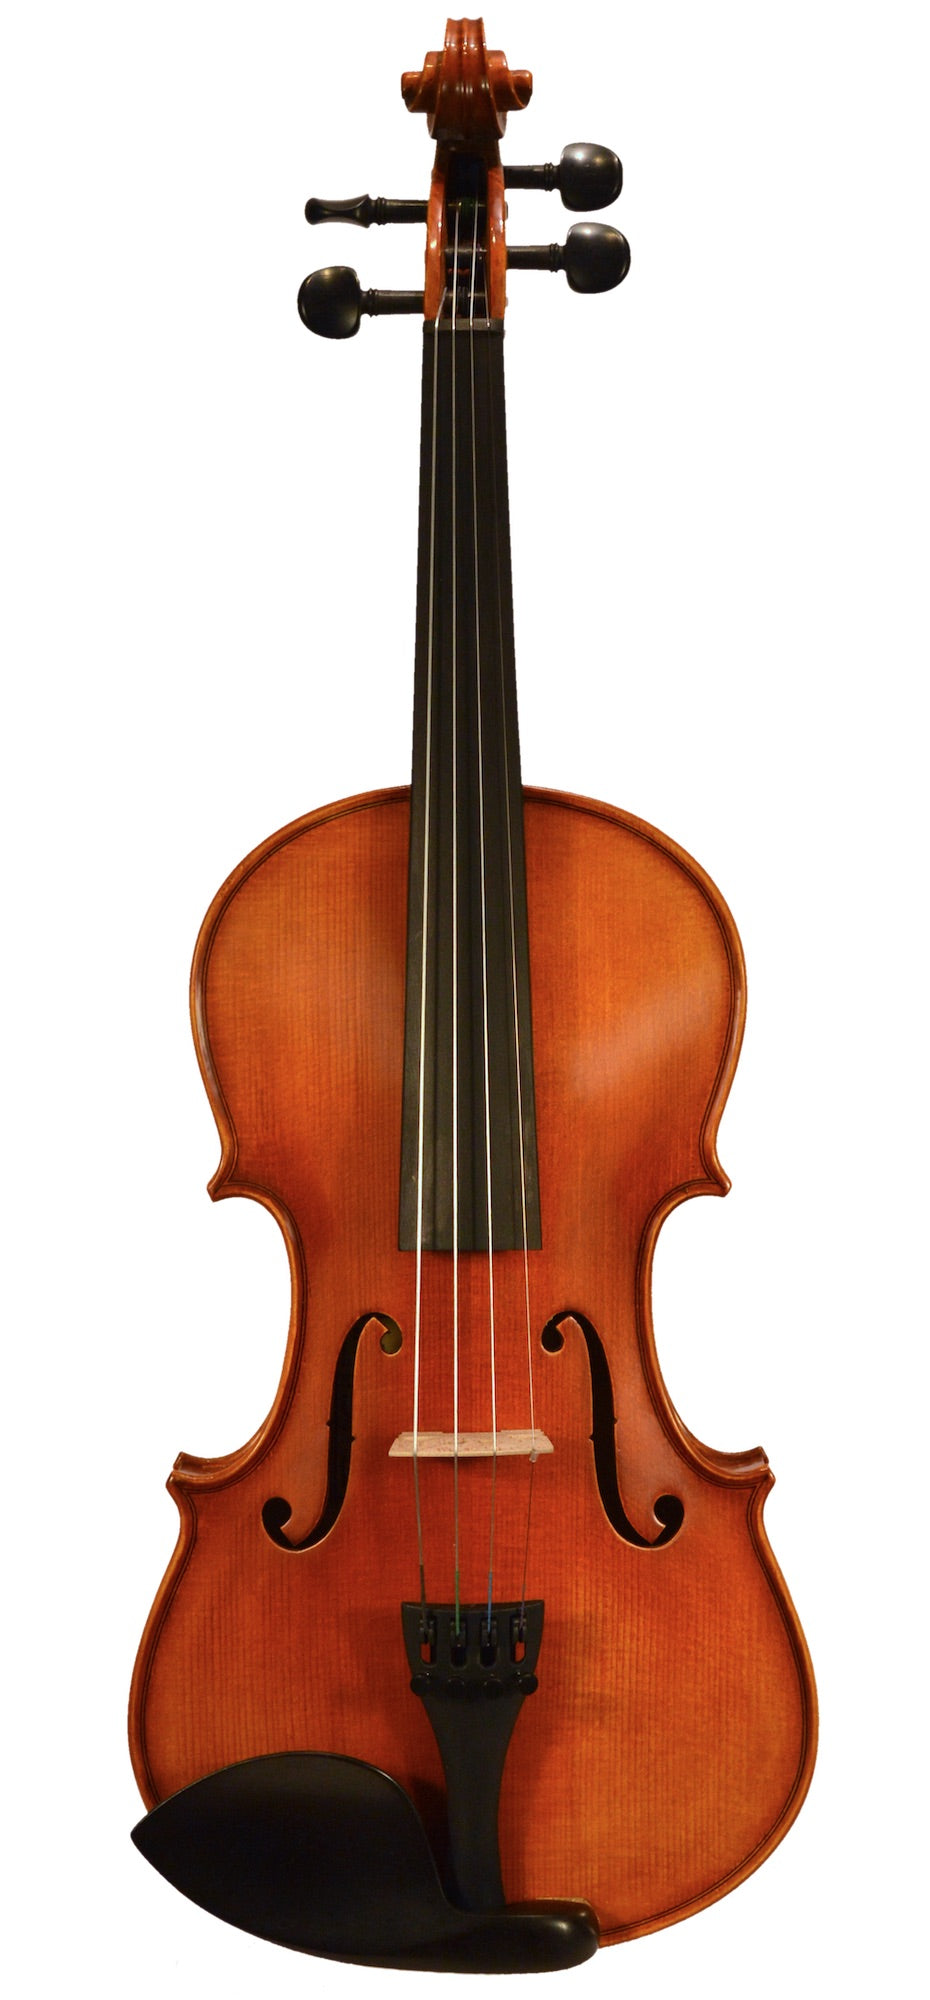 Sandner SV-309 Advanced Student Violin